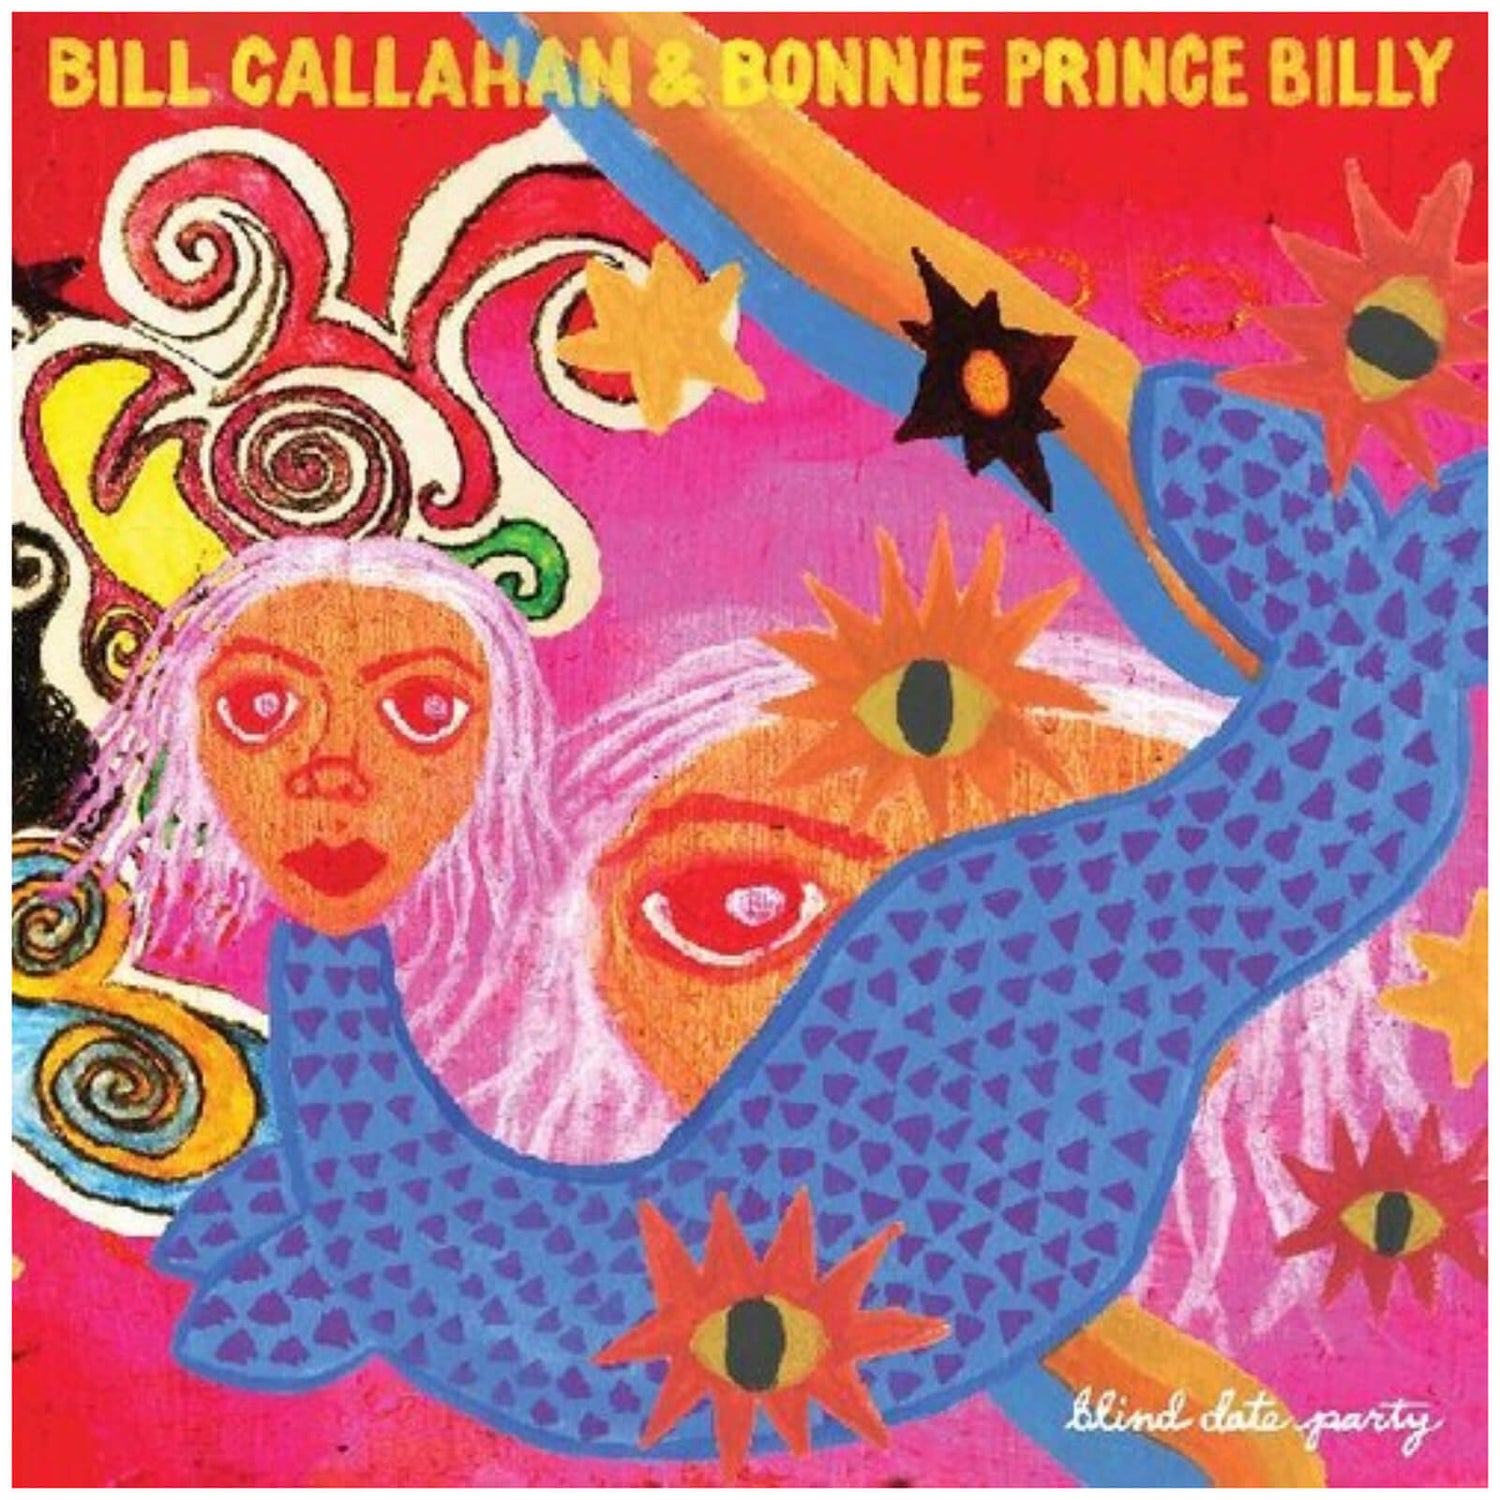 Bill Callahan & Bonnie Prince Billy - Blind Date Party Vinyl 2LP